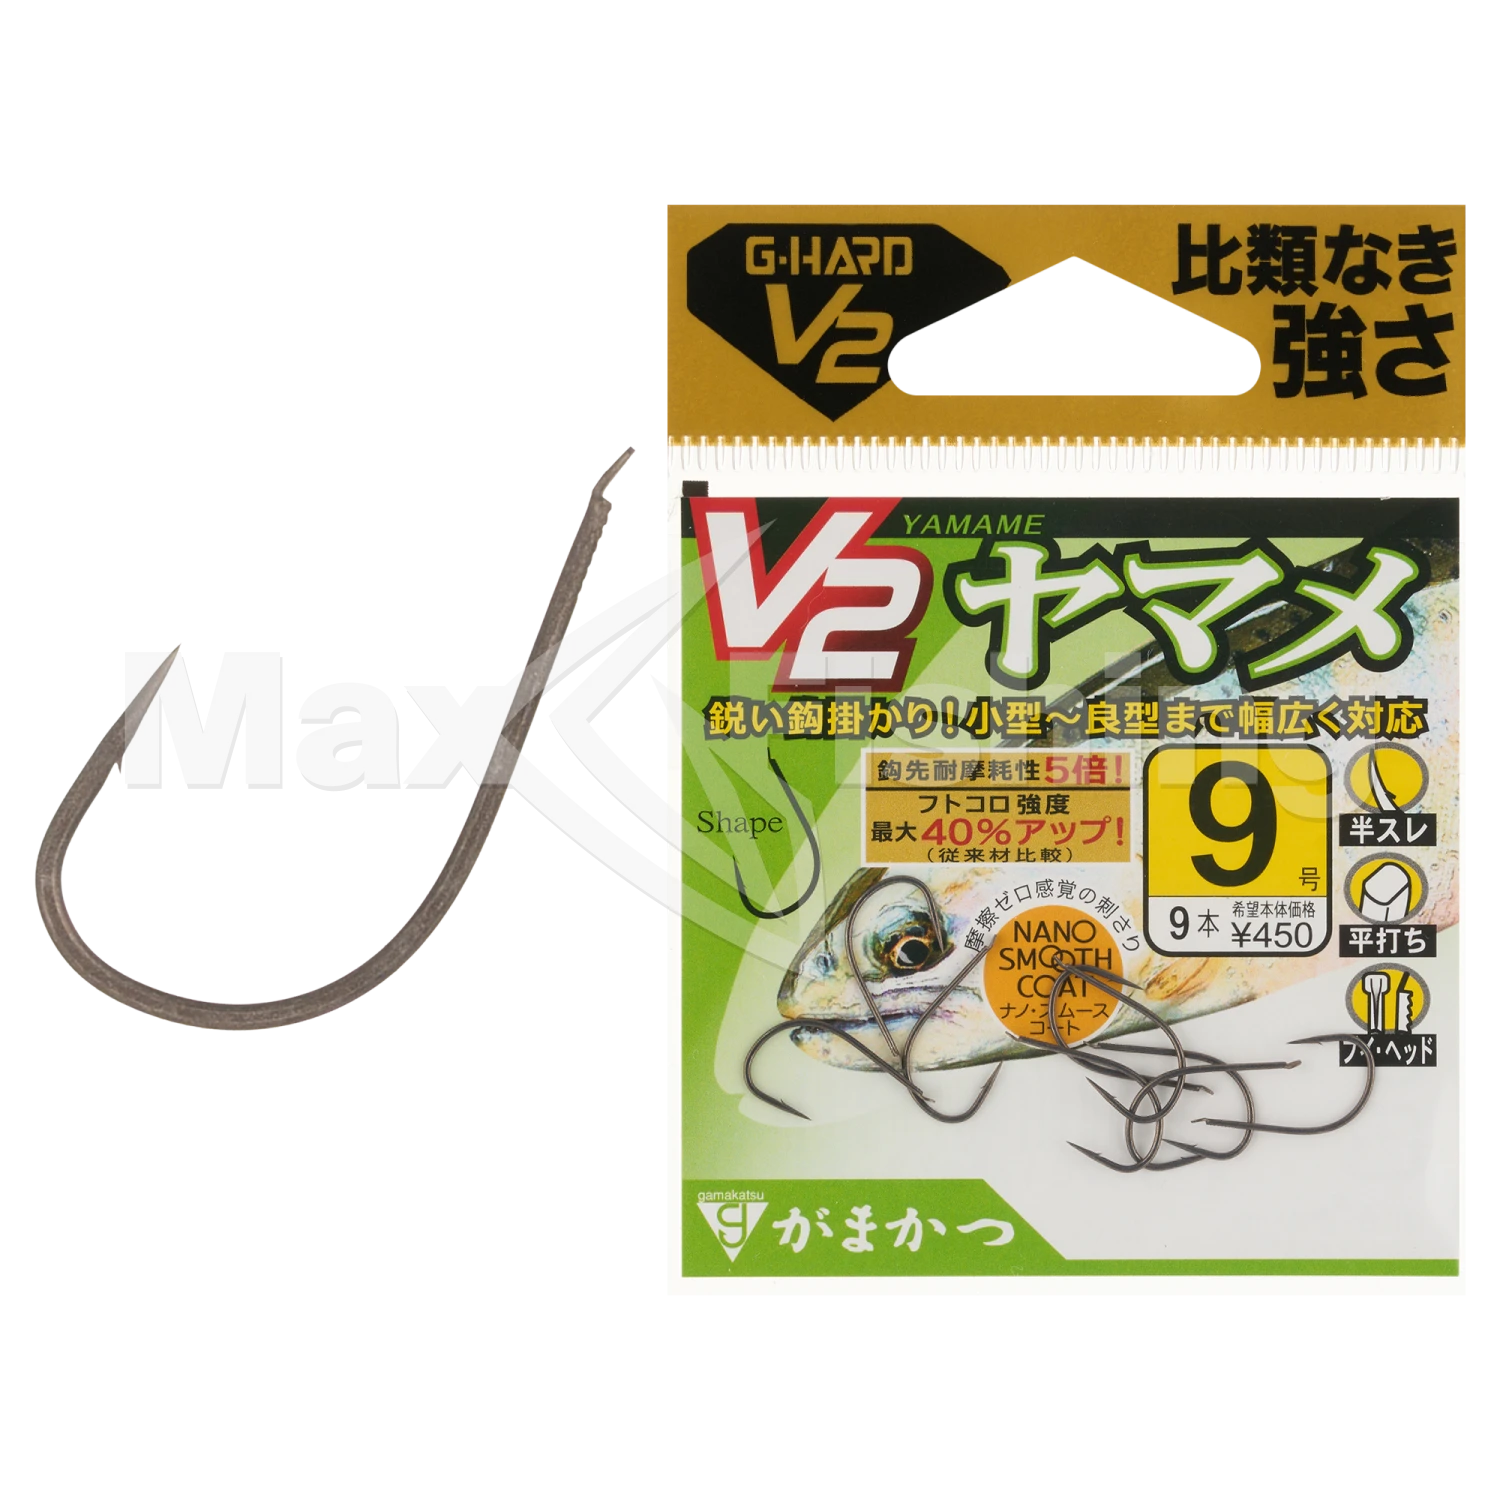 Крючок одинарный Gamakatsu G-Hard V2 Yamame Nano #9 (9шт)